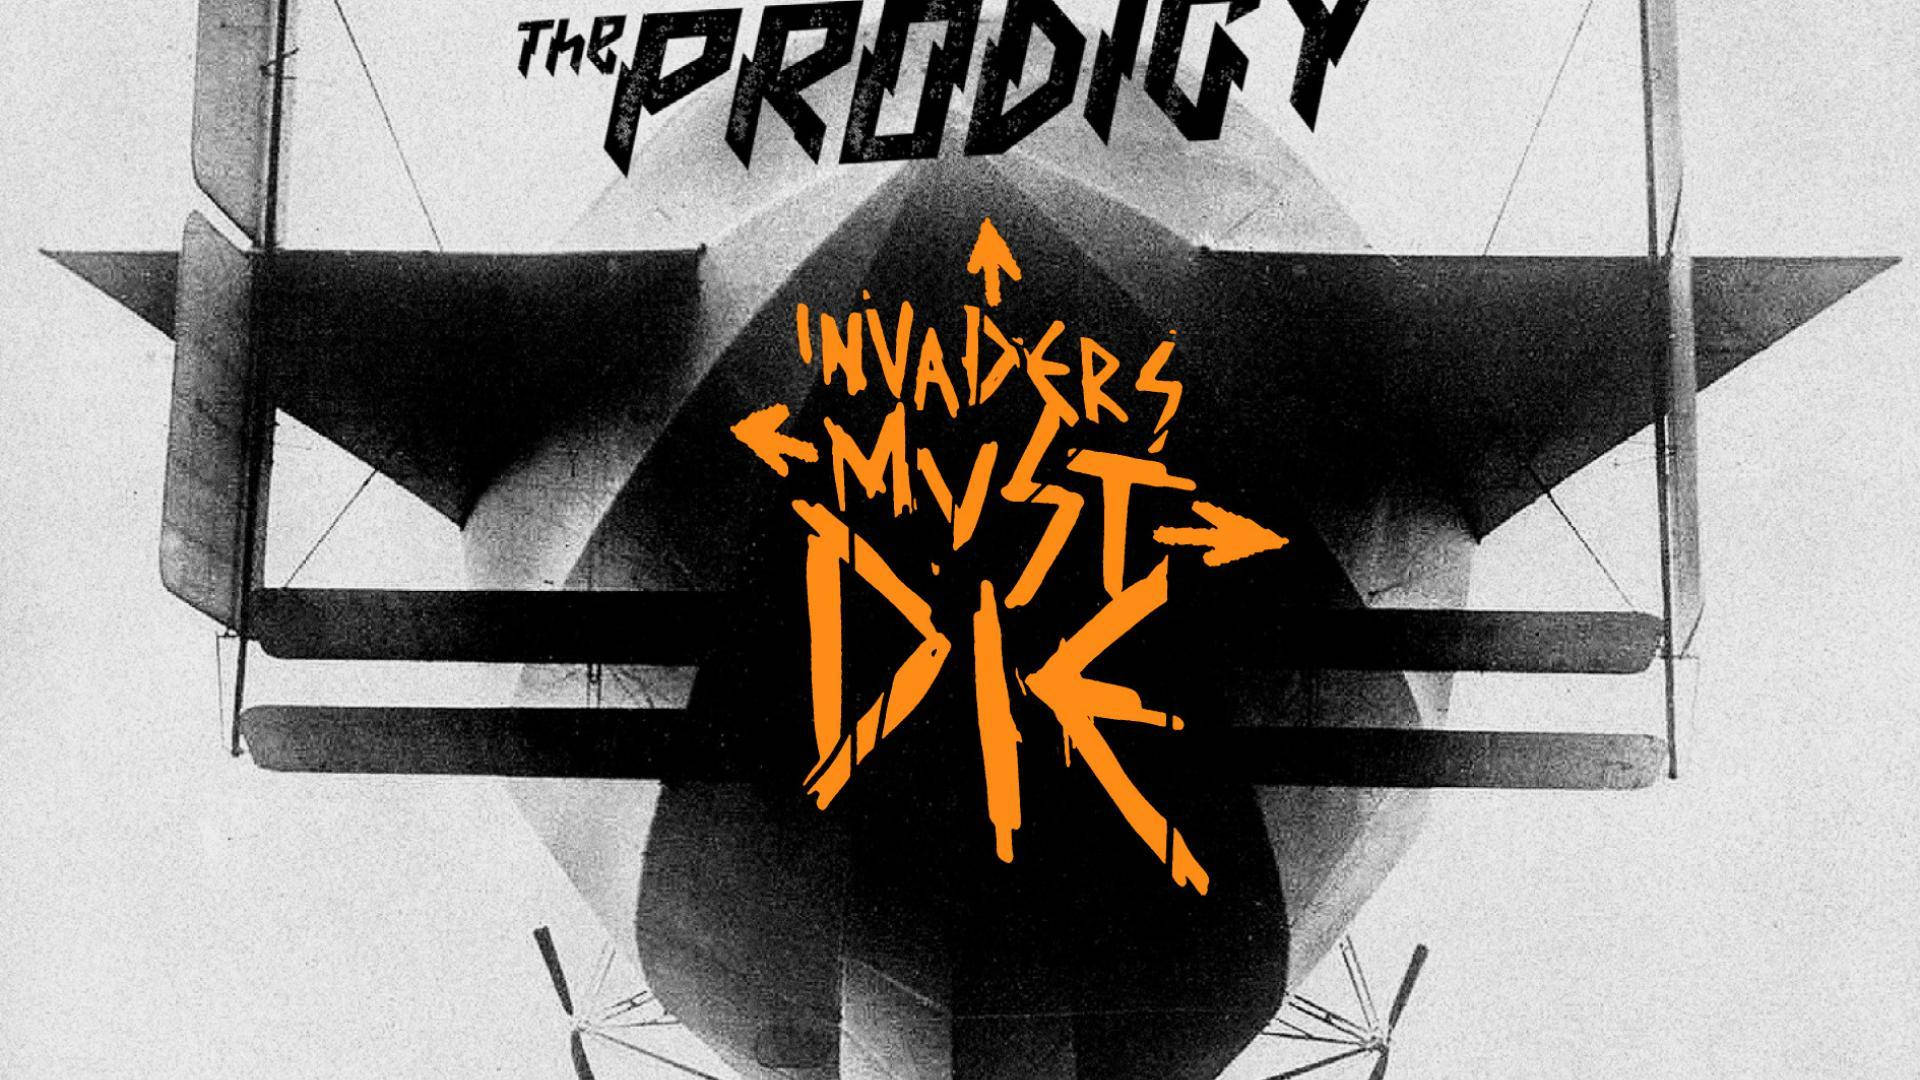 Prodigy Invaders Must Die Album Artwork Wallpaper